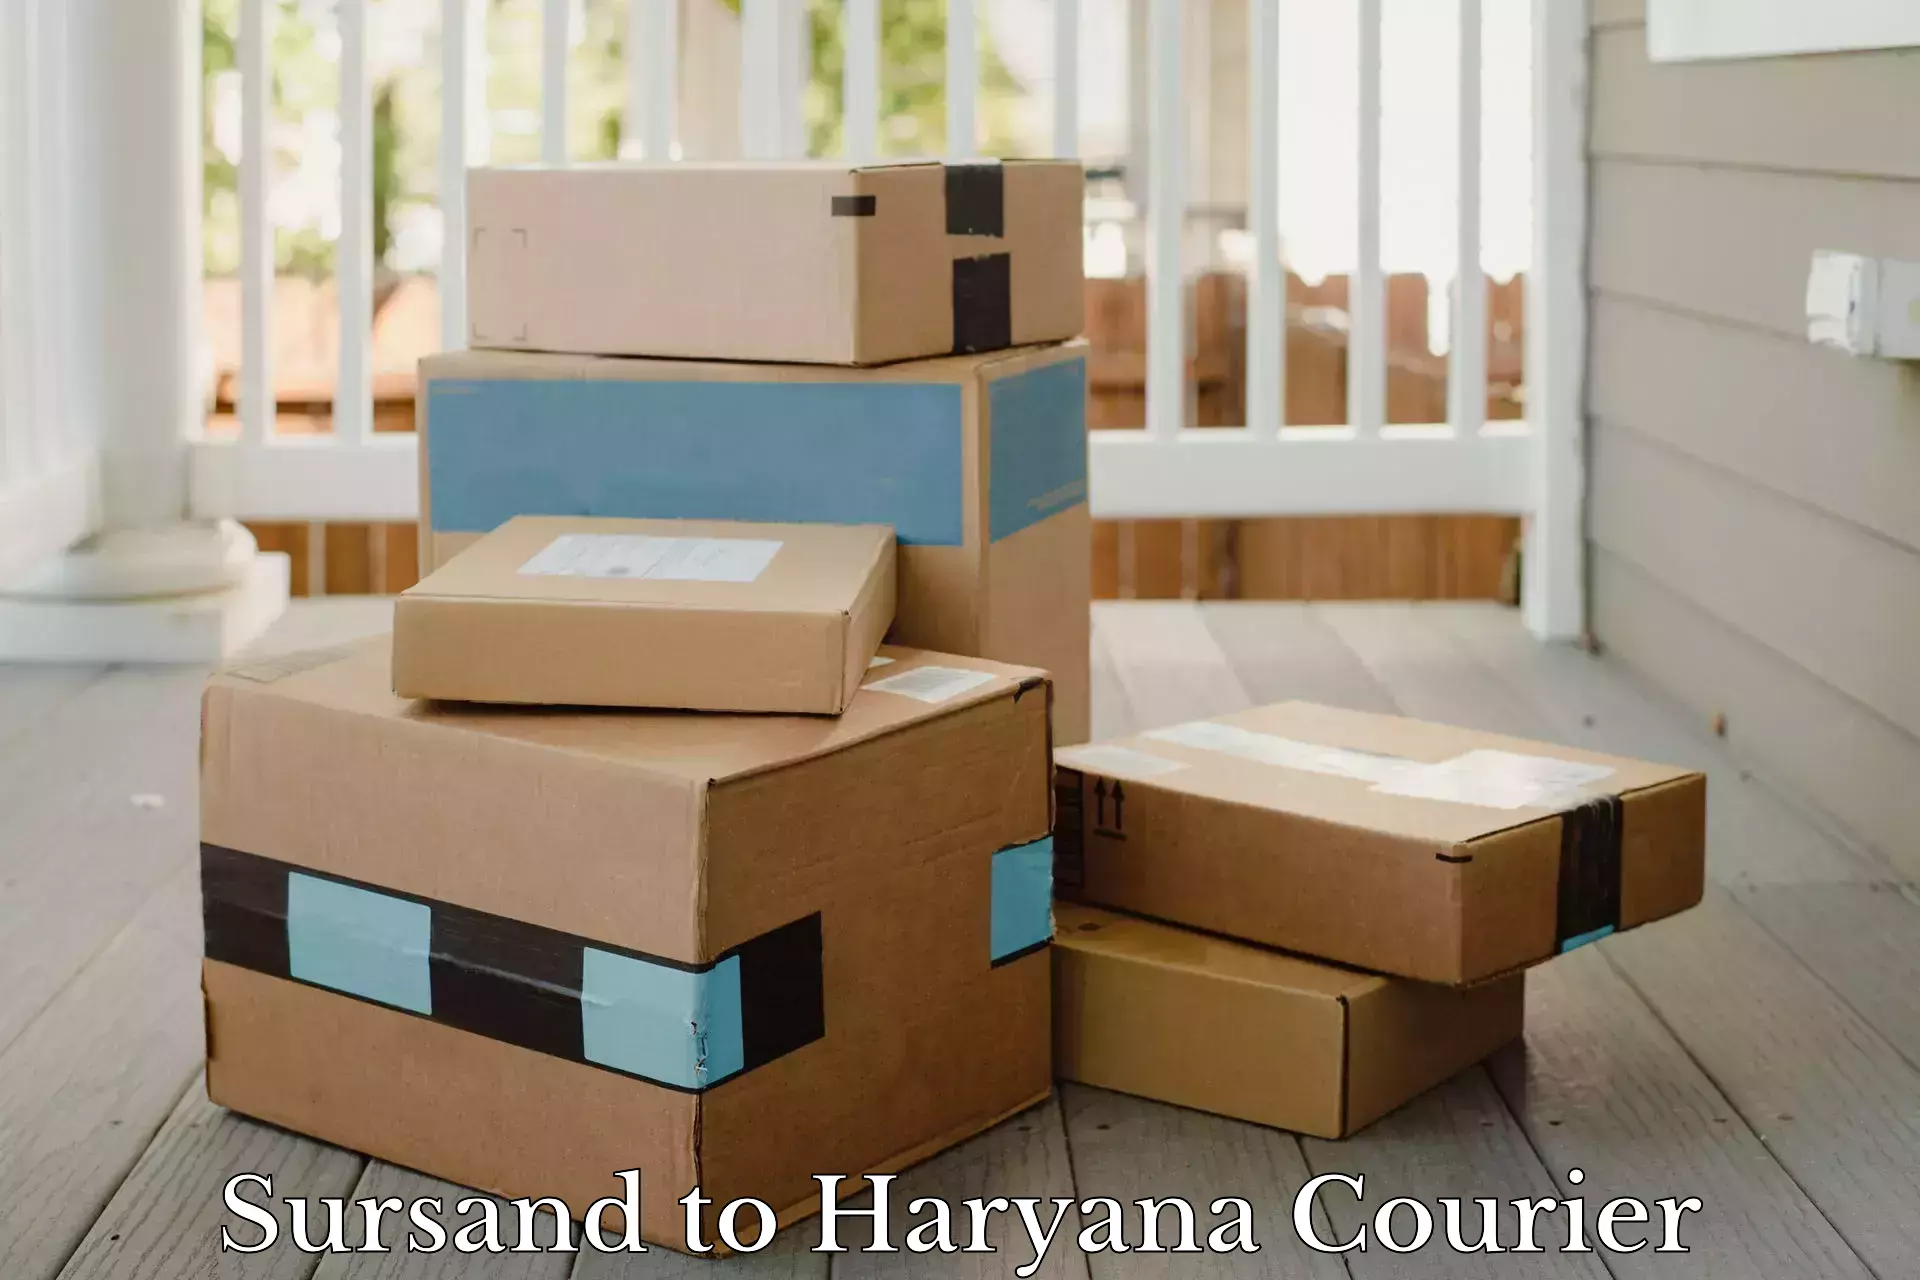 Express logistics providers Sursand to NCR Haryana